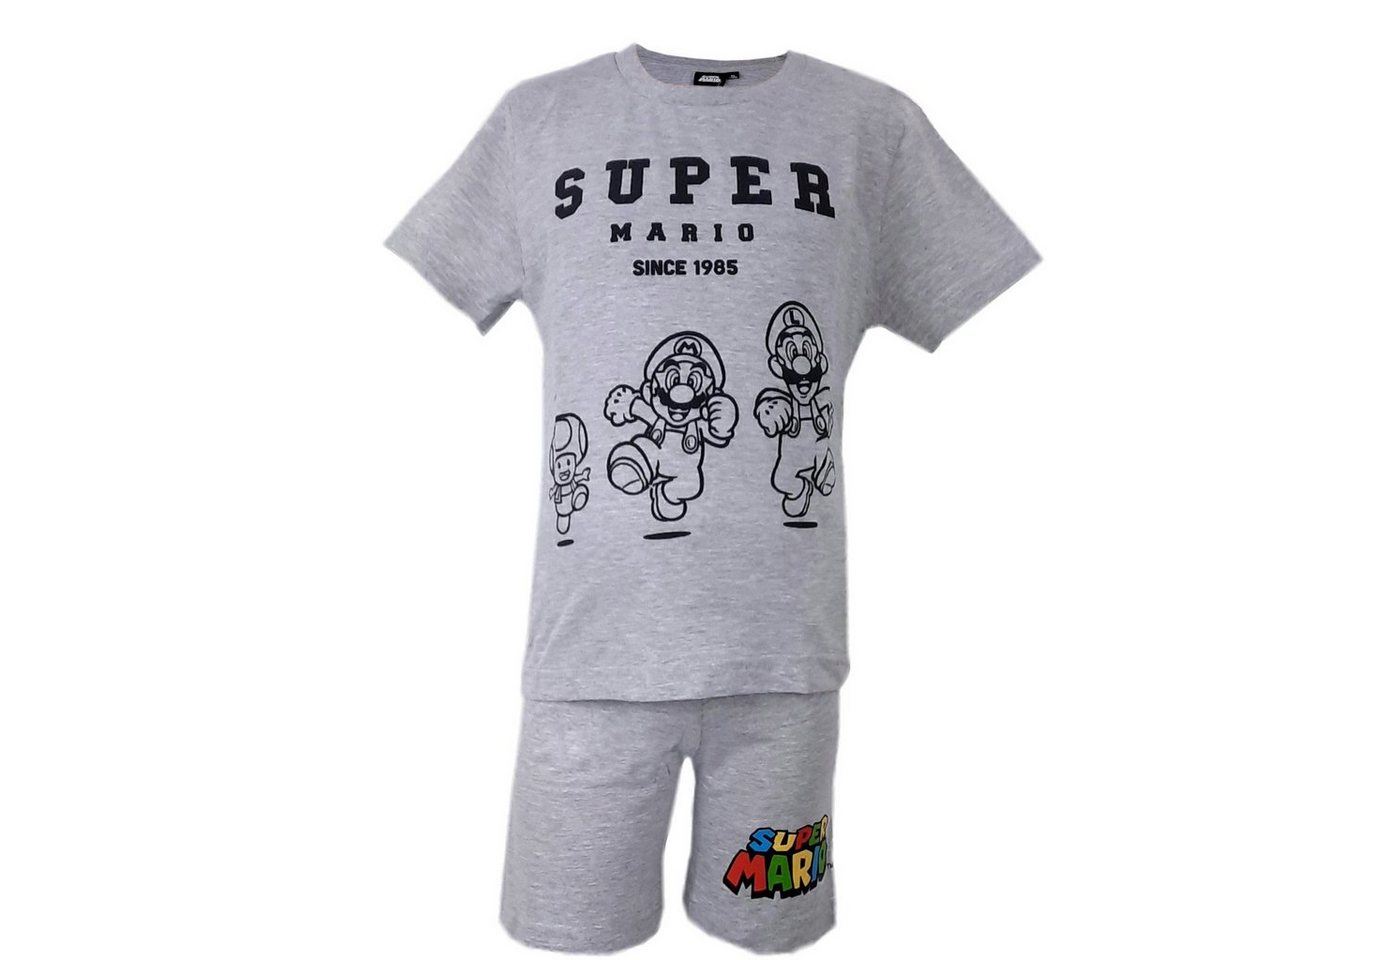 Super Mario Pyjama Super Mario 2 tlg. Kinder Pyjama (2 Stück) Gr. 104,116, Baumwolle von Super Mario